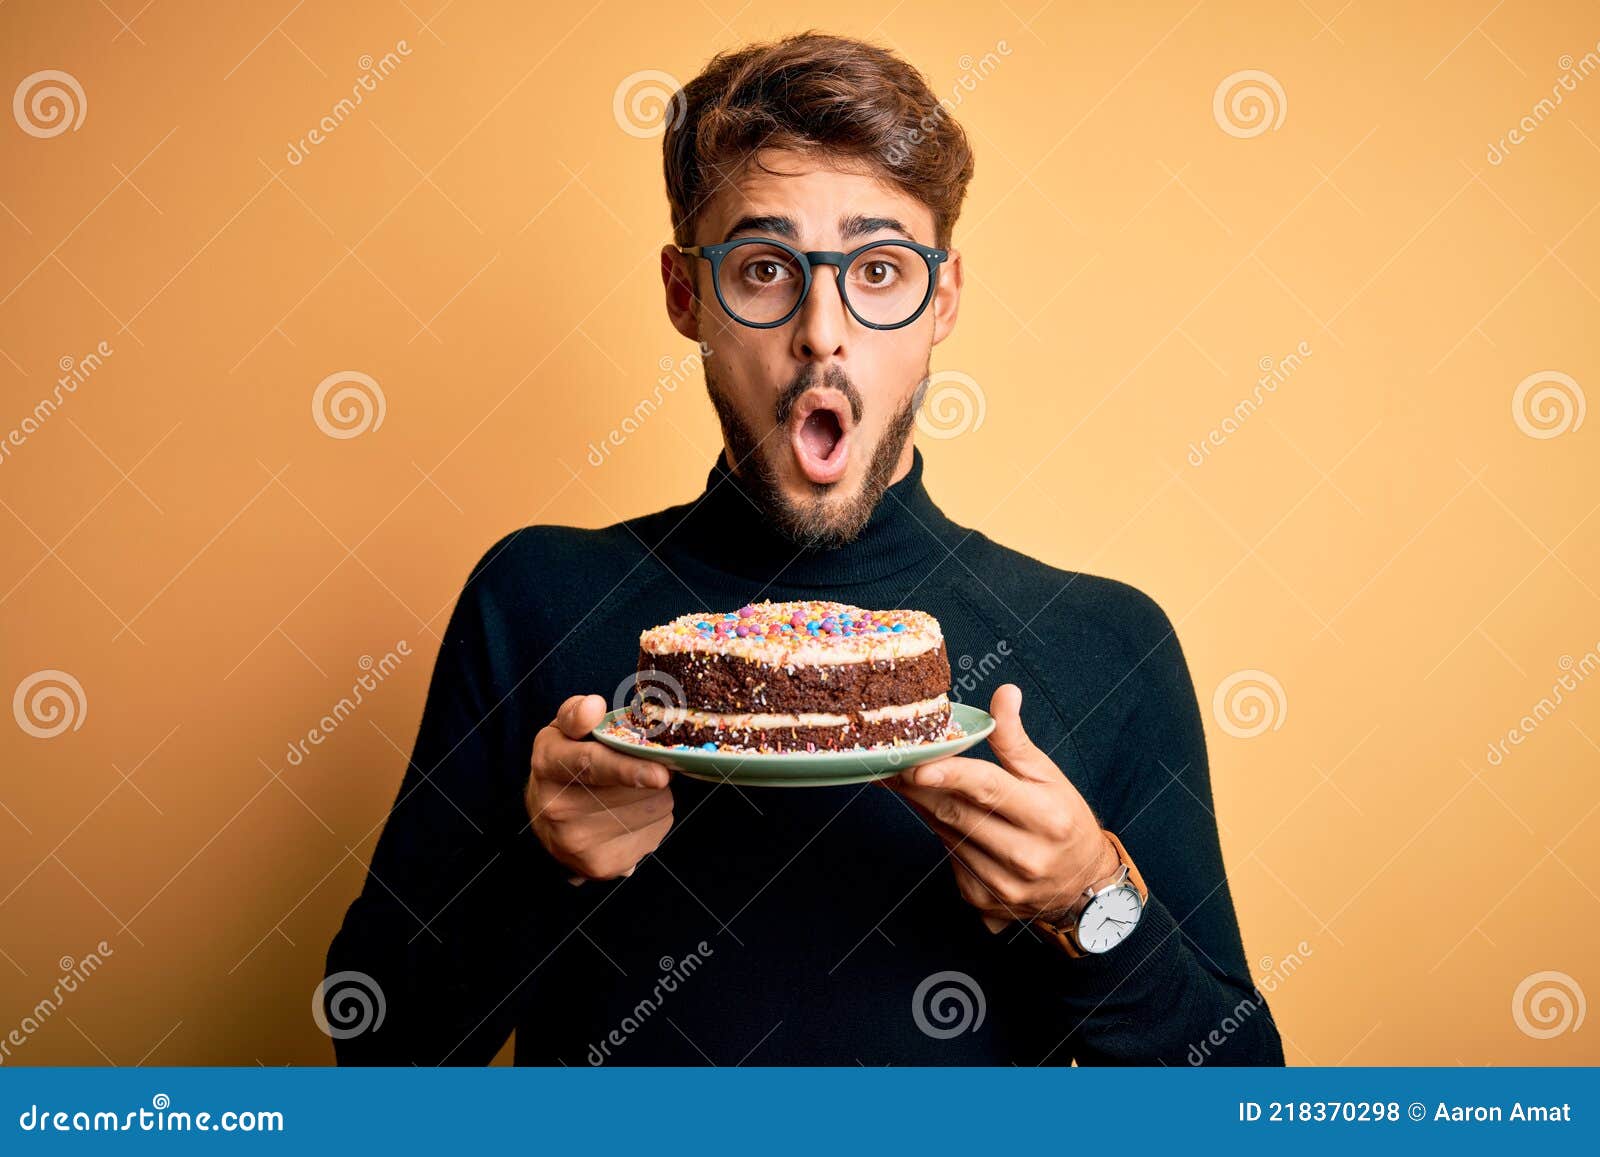 Handsome Dad Birthday Cake - Cake Square Chennai | Cake Shop in Chennai